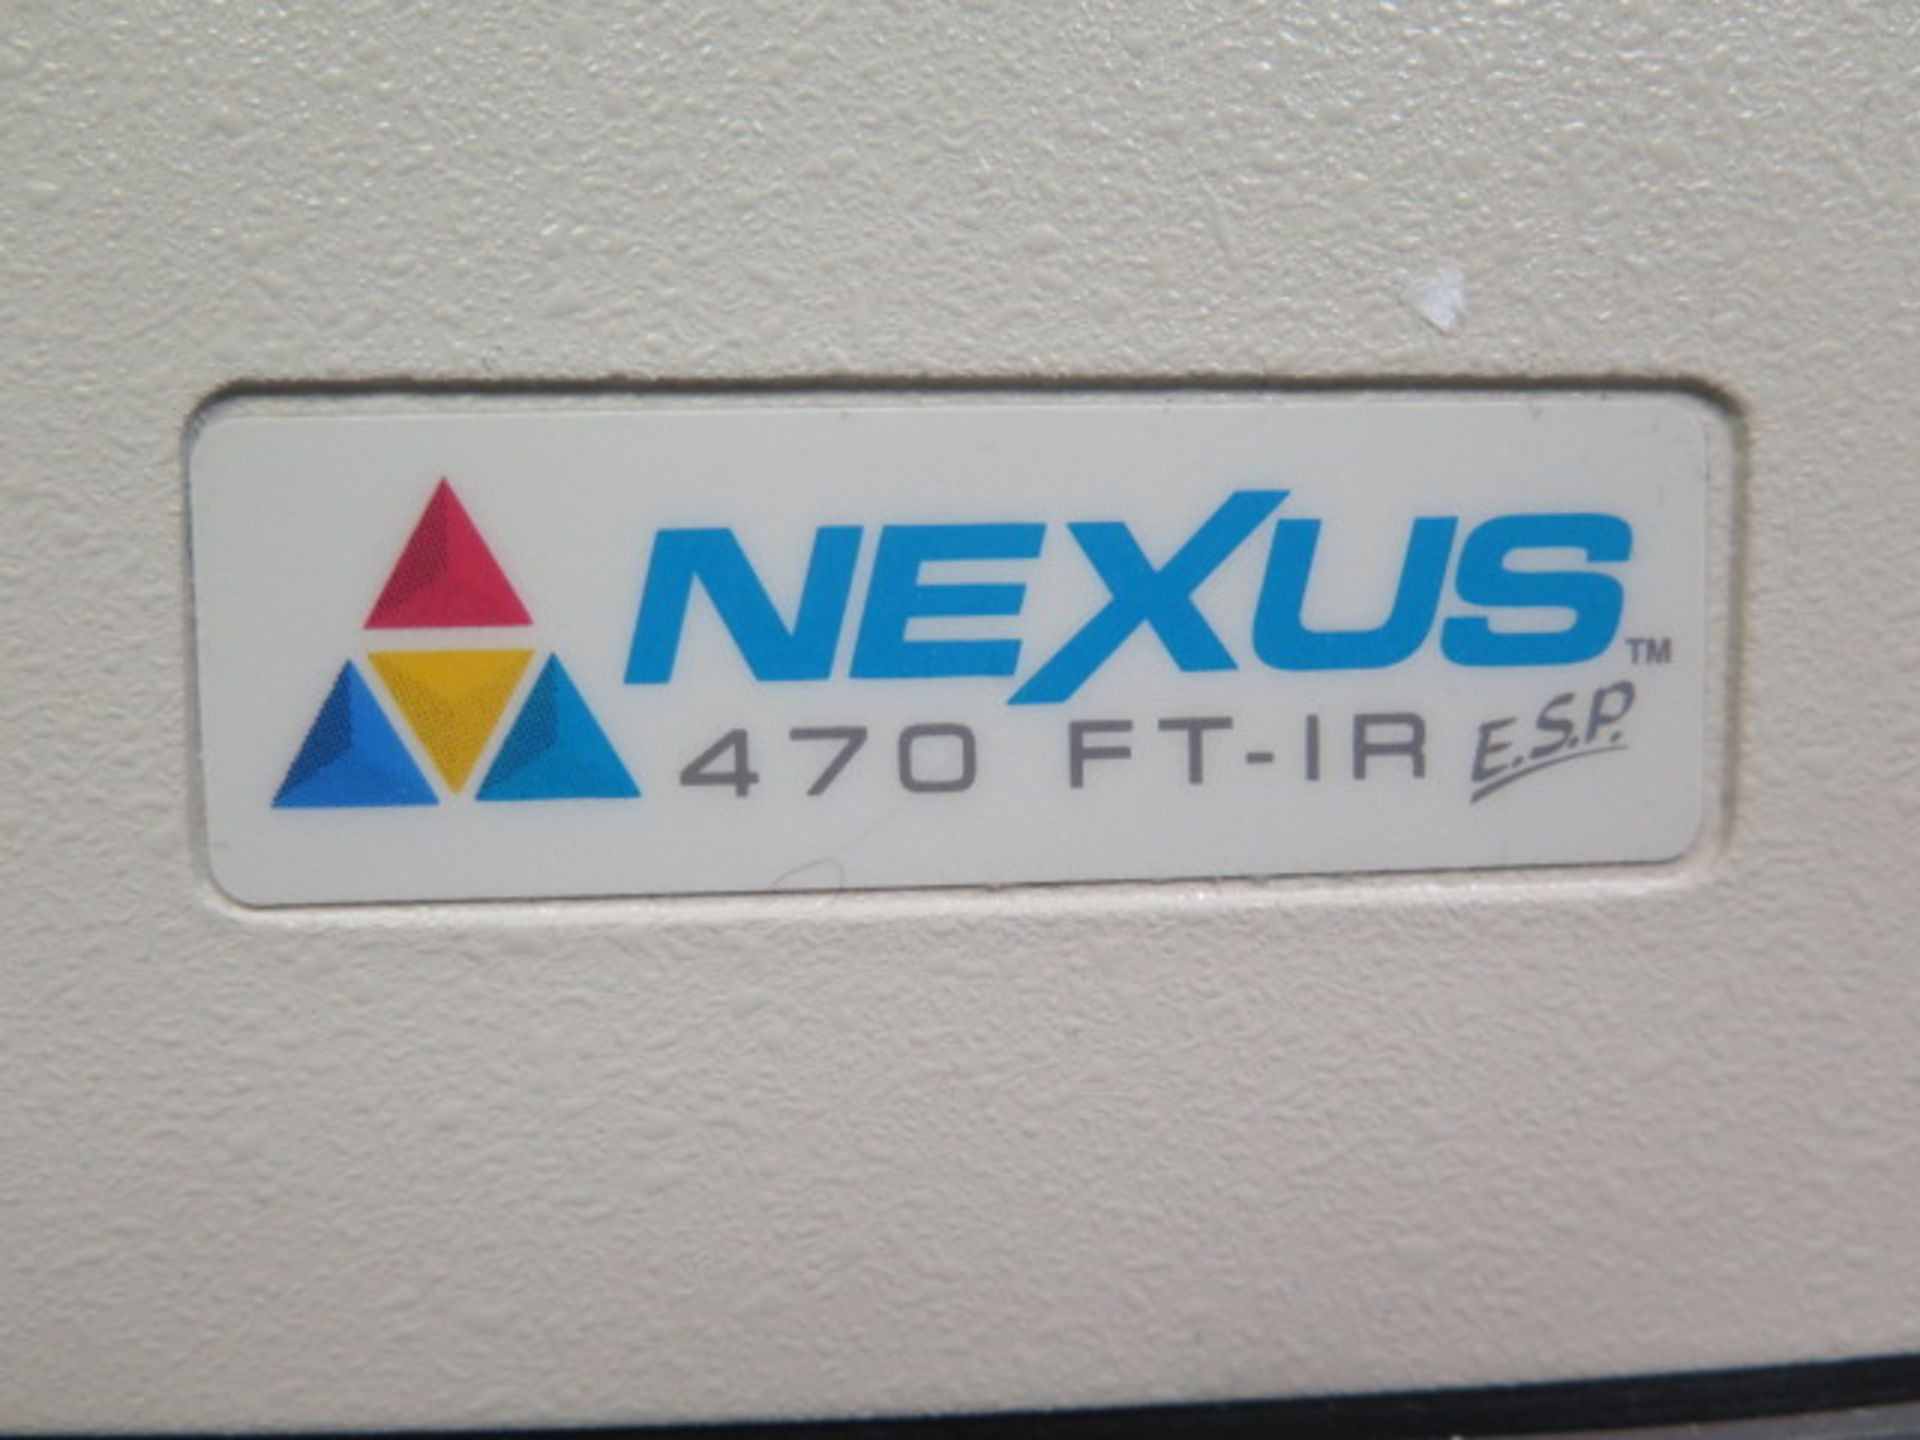 Thermo Nicolet “Nexus 470 TF-IR ESP” FT-IR Spectrometer (SOLD AS-IS - NO WARRANTY) - Image 9 of 9